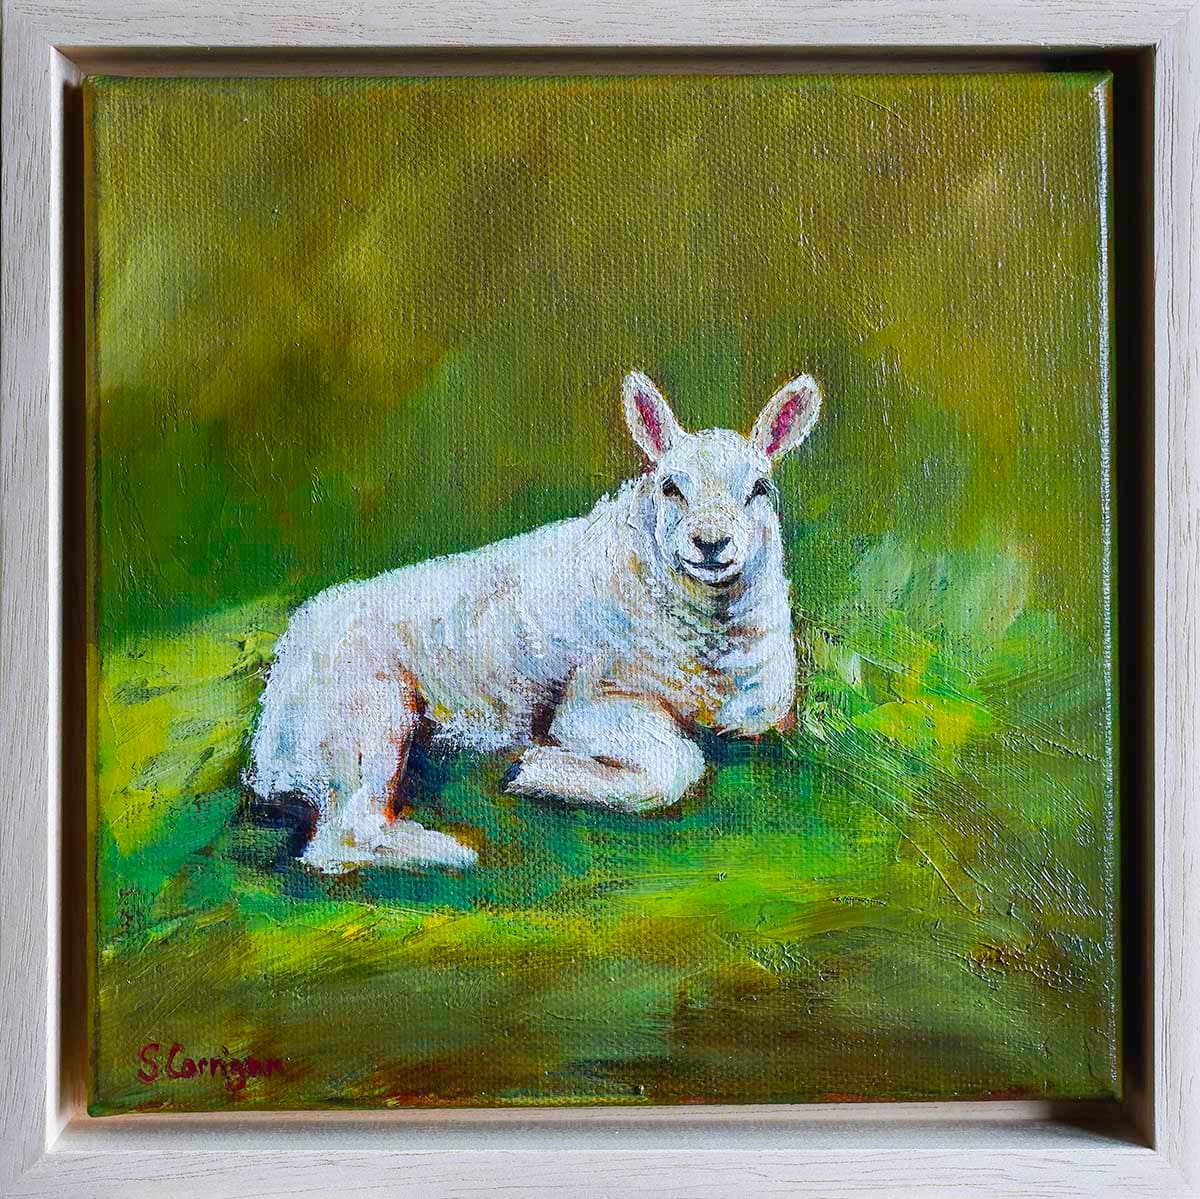 Ingram Lamb (i) by Sarah Corrigan 